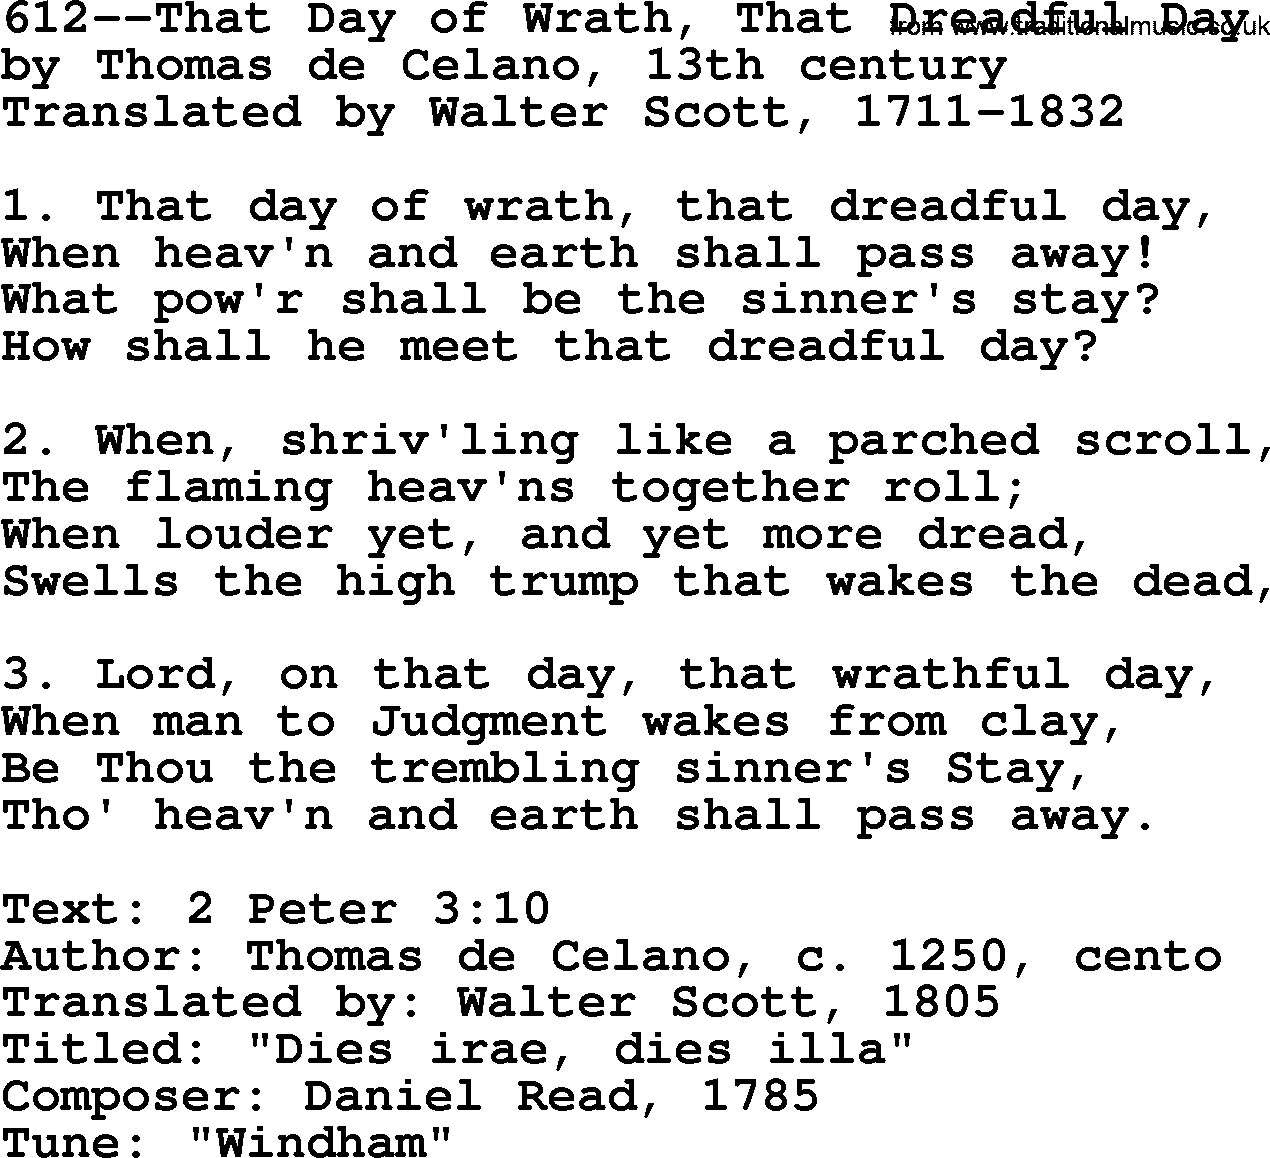 Lutheran Hymn: 612--That Day of Wrath, That Dreadful Day.txt lyrics with PDF